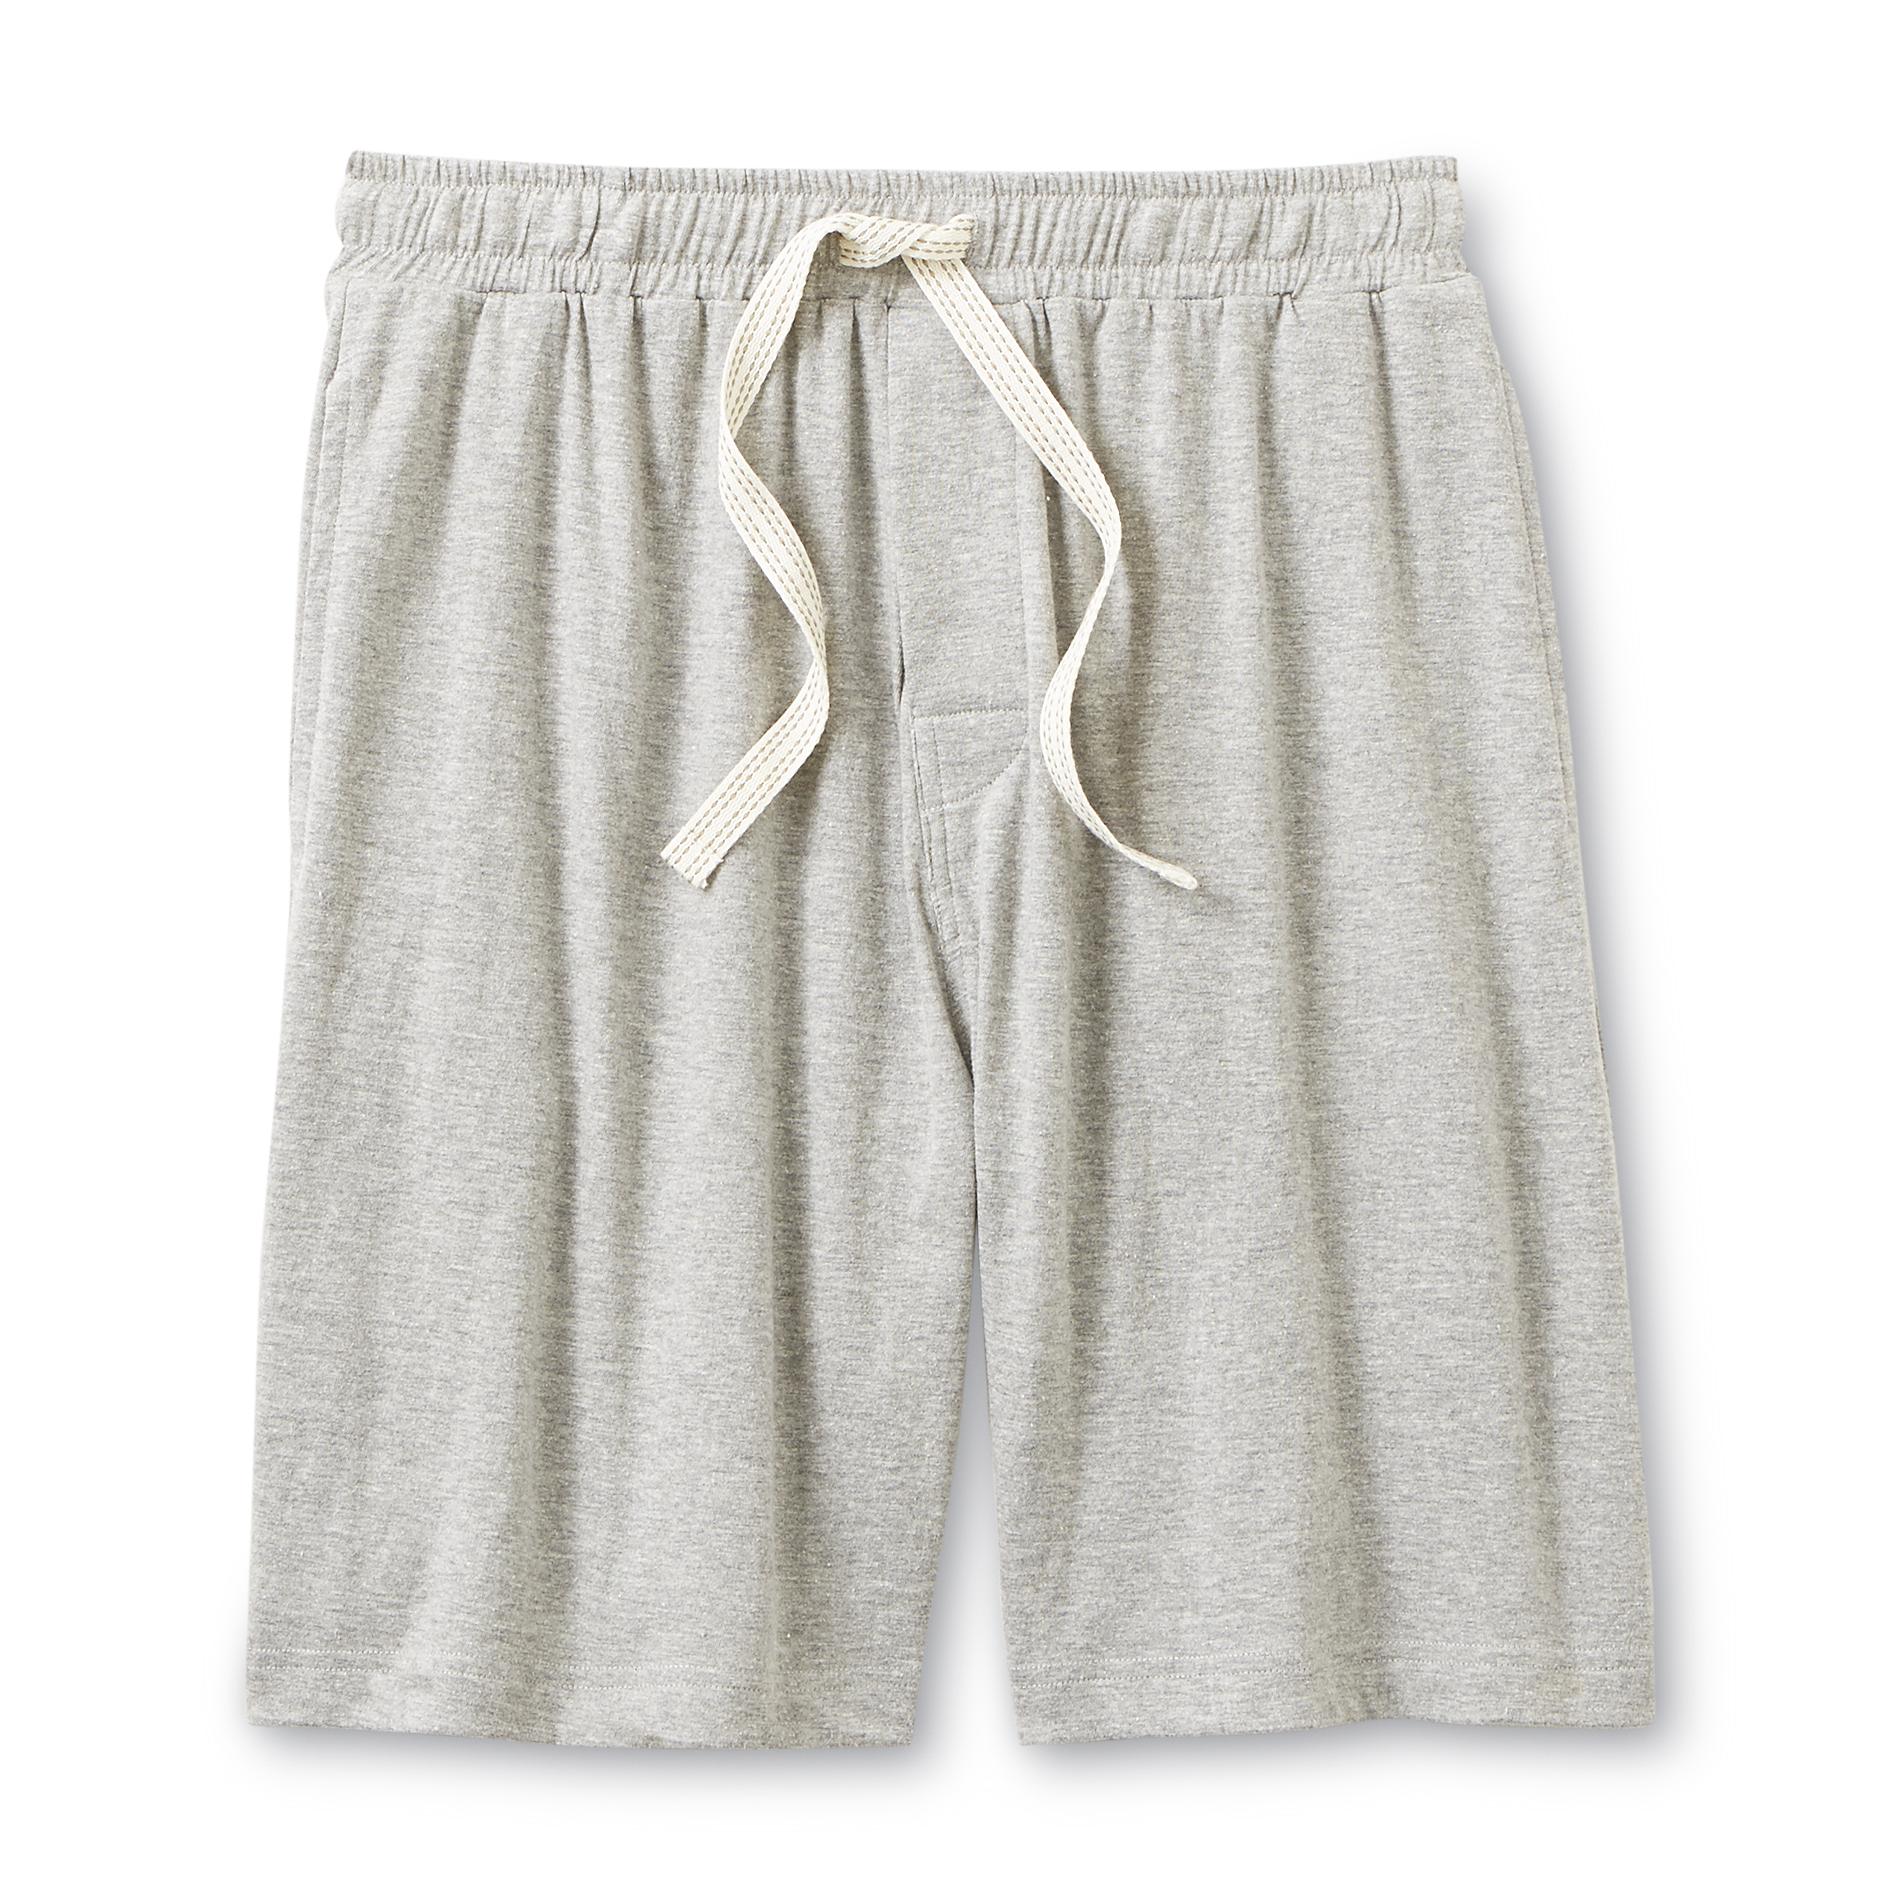 Joe Boxer Men's Drawstring Knit Shorts